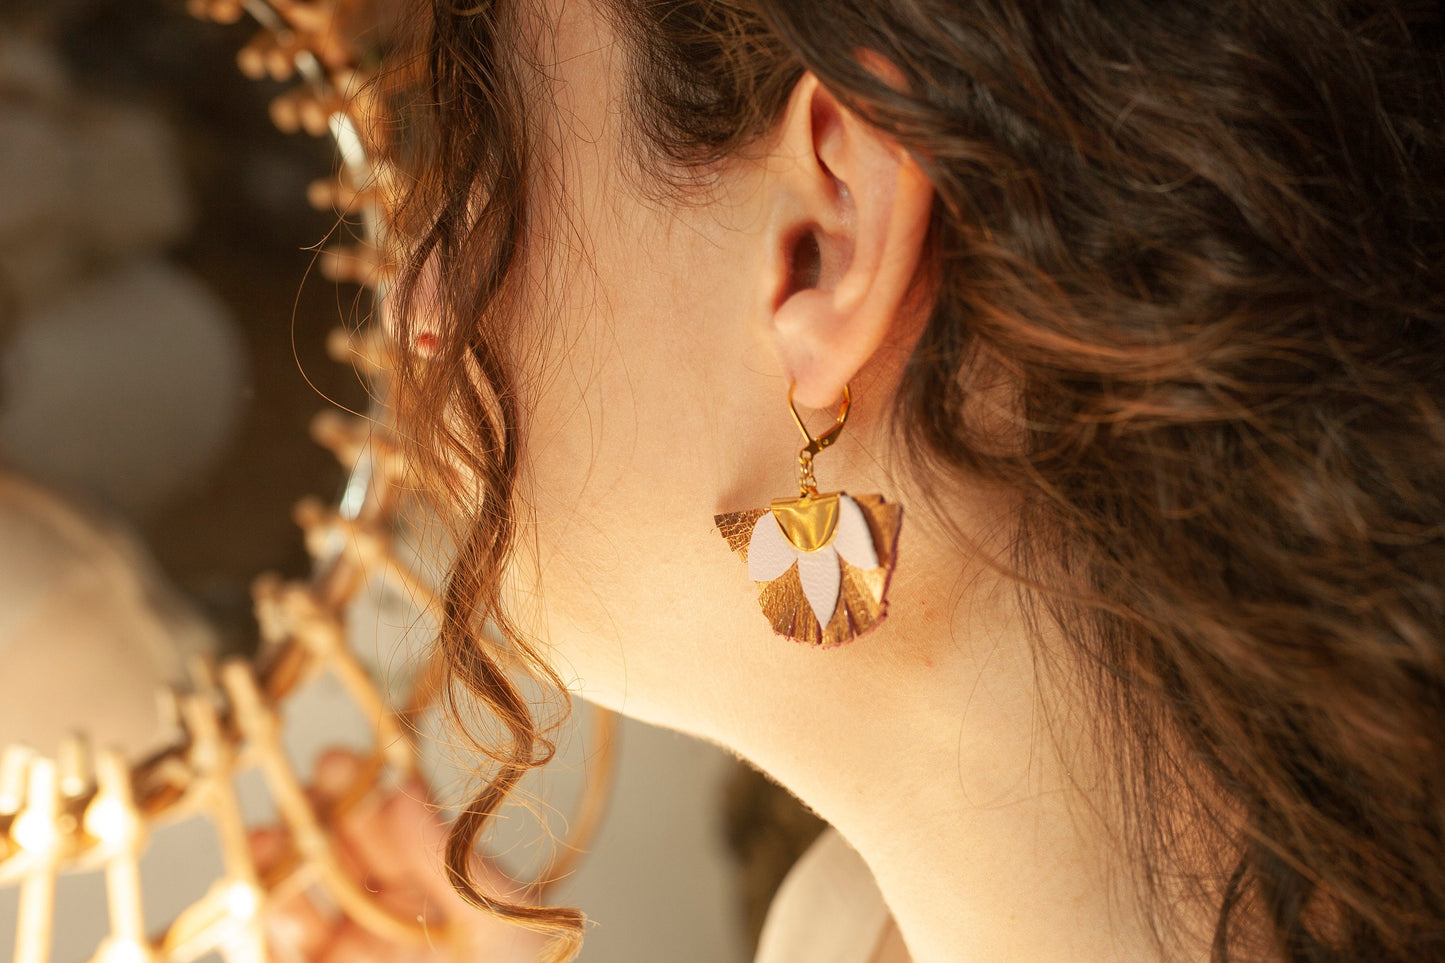 Halbkreisförmige Ohrringe in Rosa und Kupfer